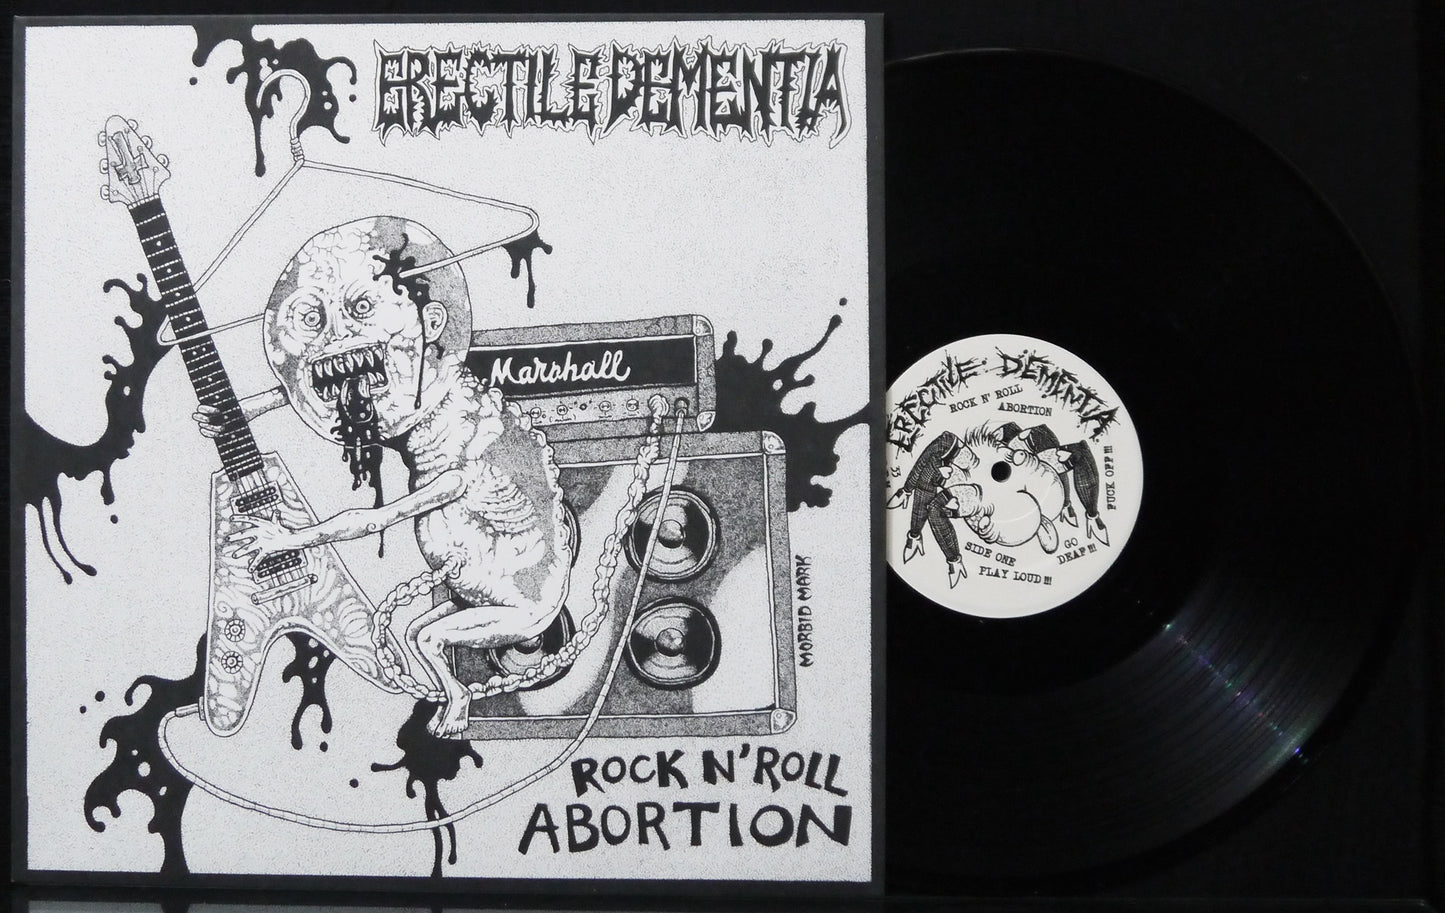 ERECTILE DEMENTIA - Rock N' Roll Abortion 12"